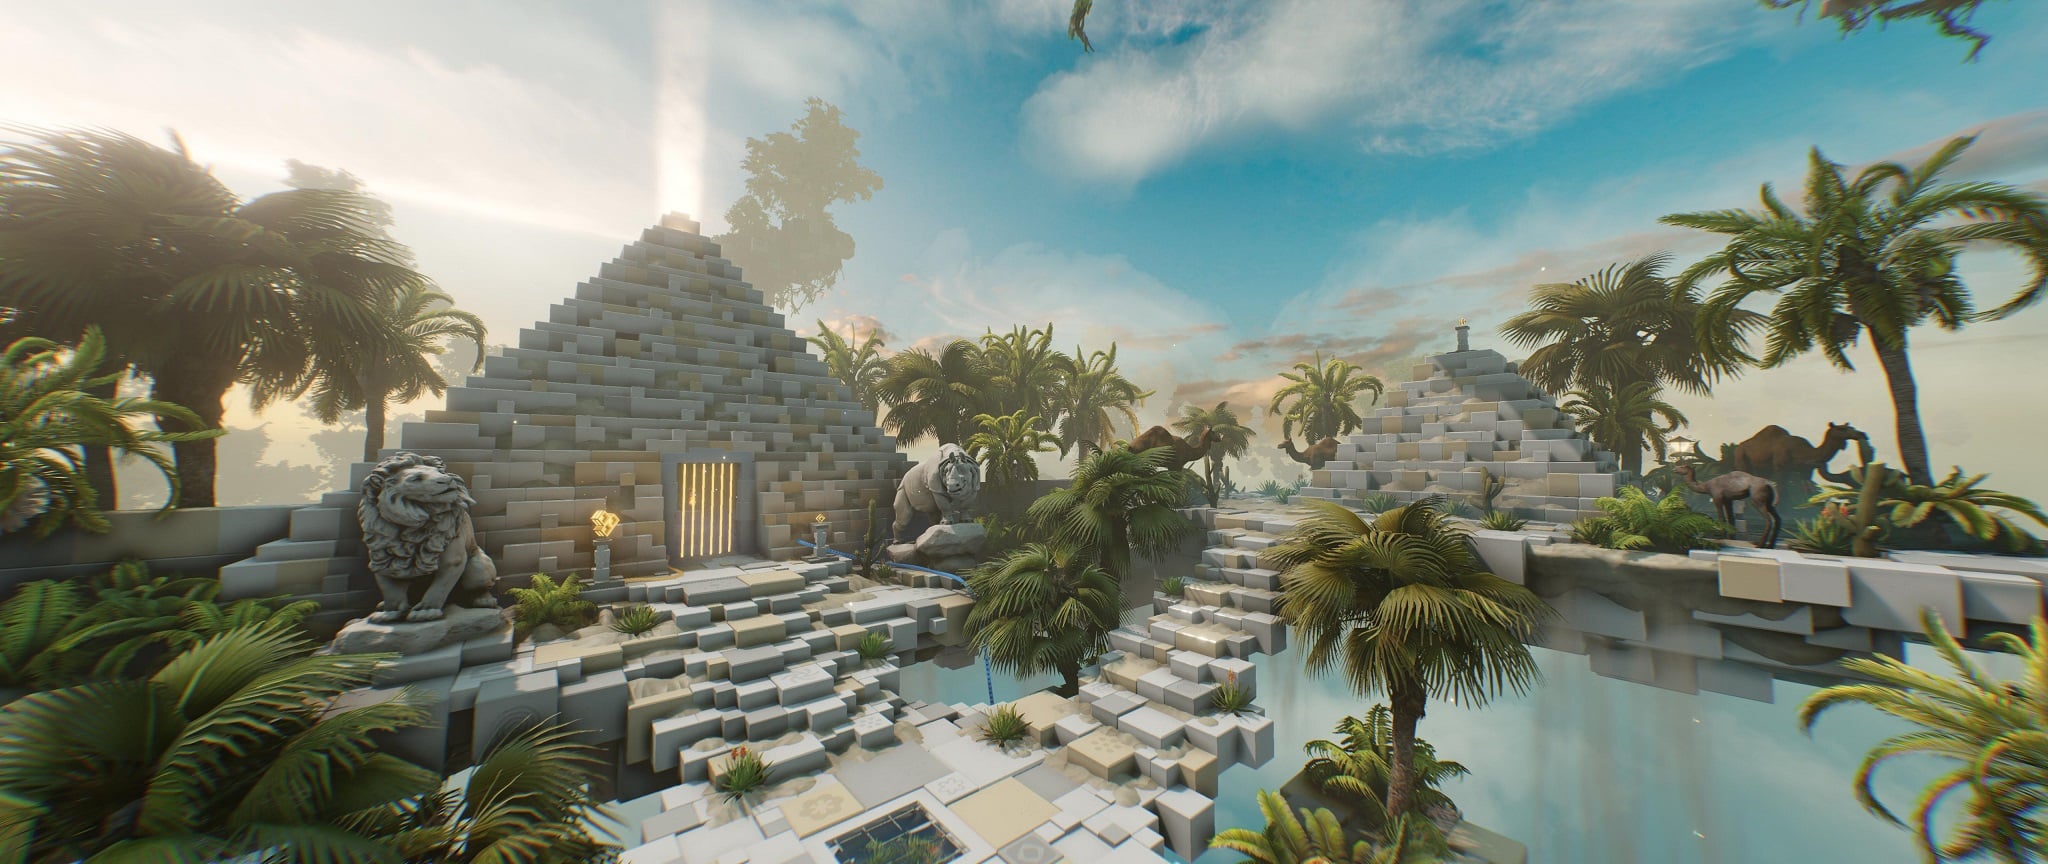 Jungle quest virtual reality screenshot 8 sml